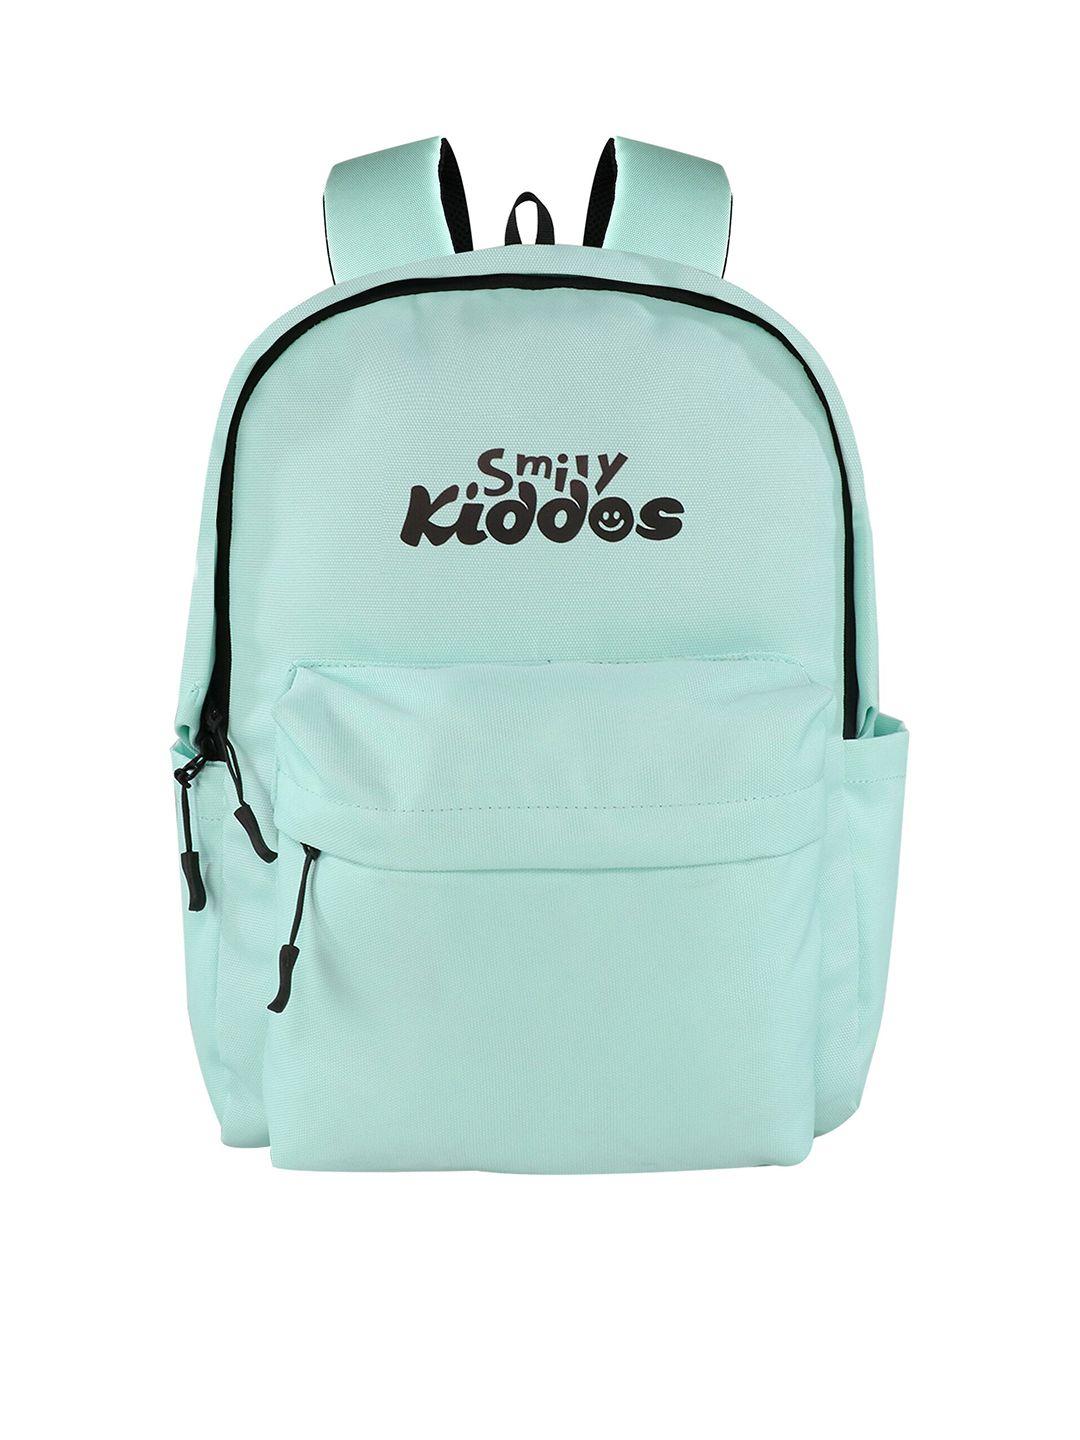 smily kiddos brand logo printed backpack